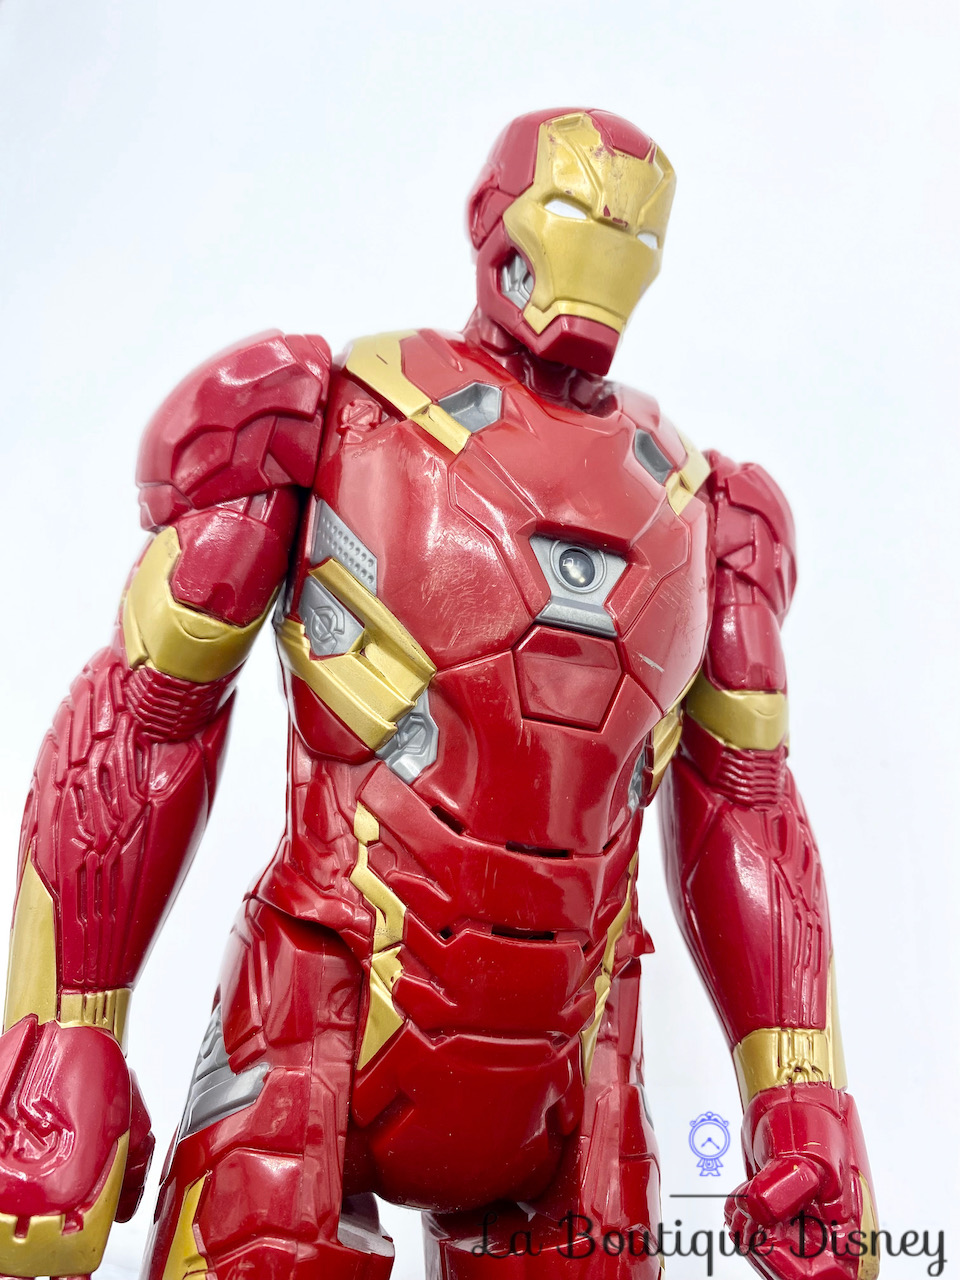 jouet-iron-man-parle-interactif-disney-marvel-hasbro-super-héro-4